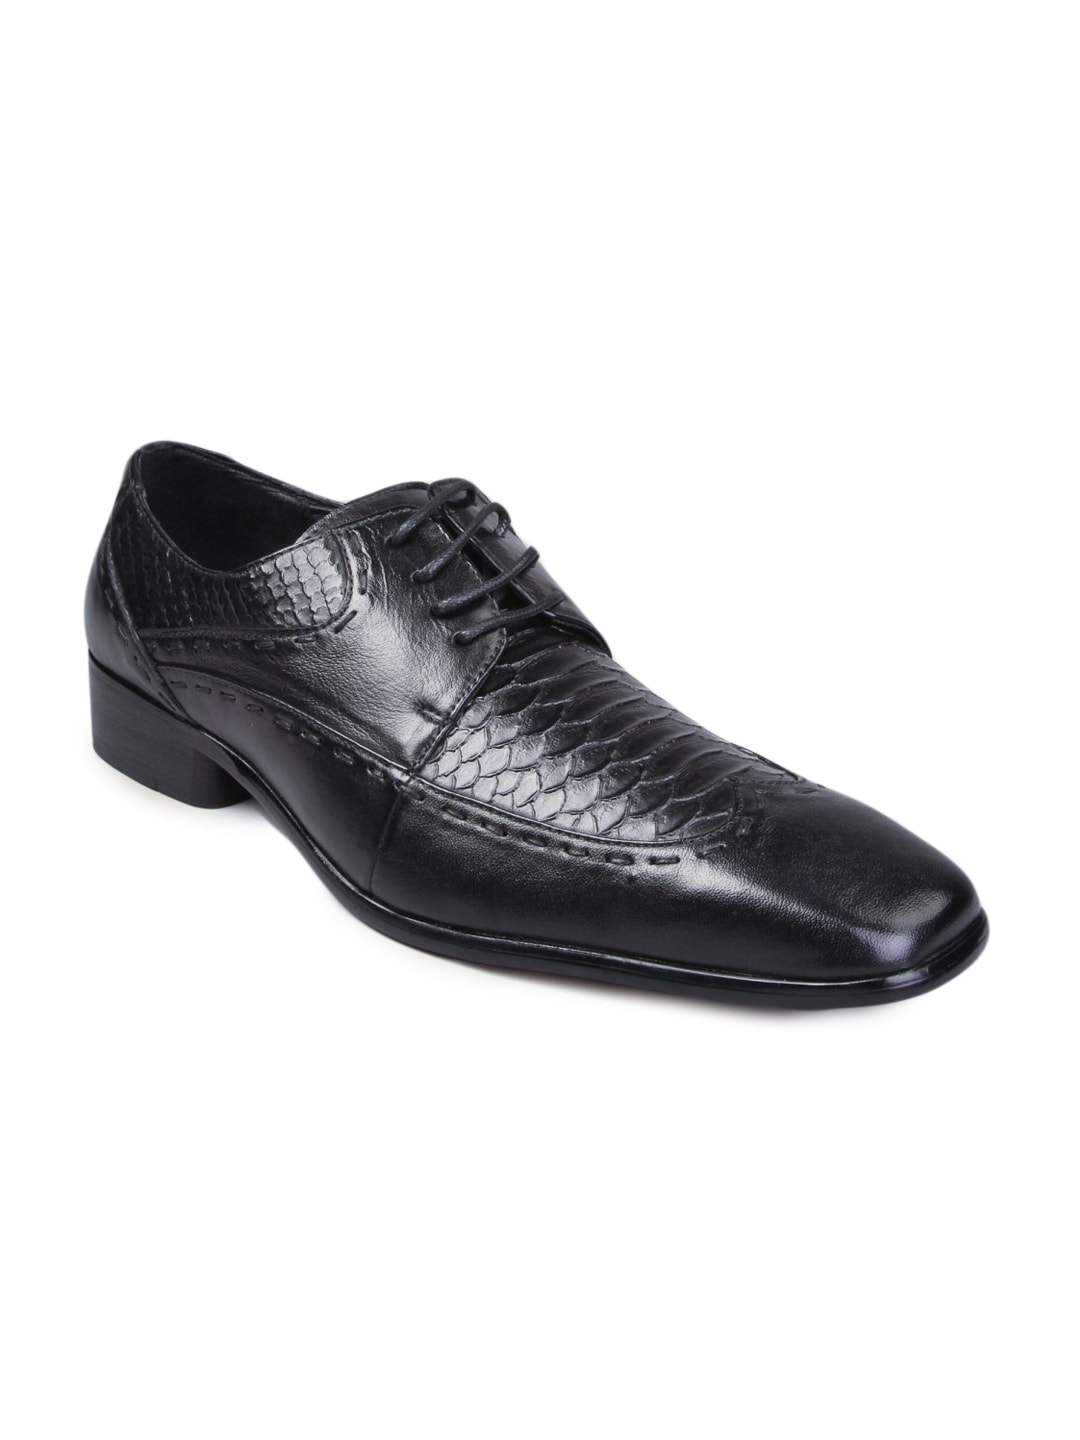 Carlton London Men's Semi Formal Black Shoe